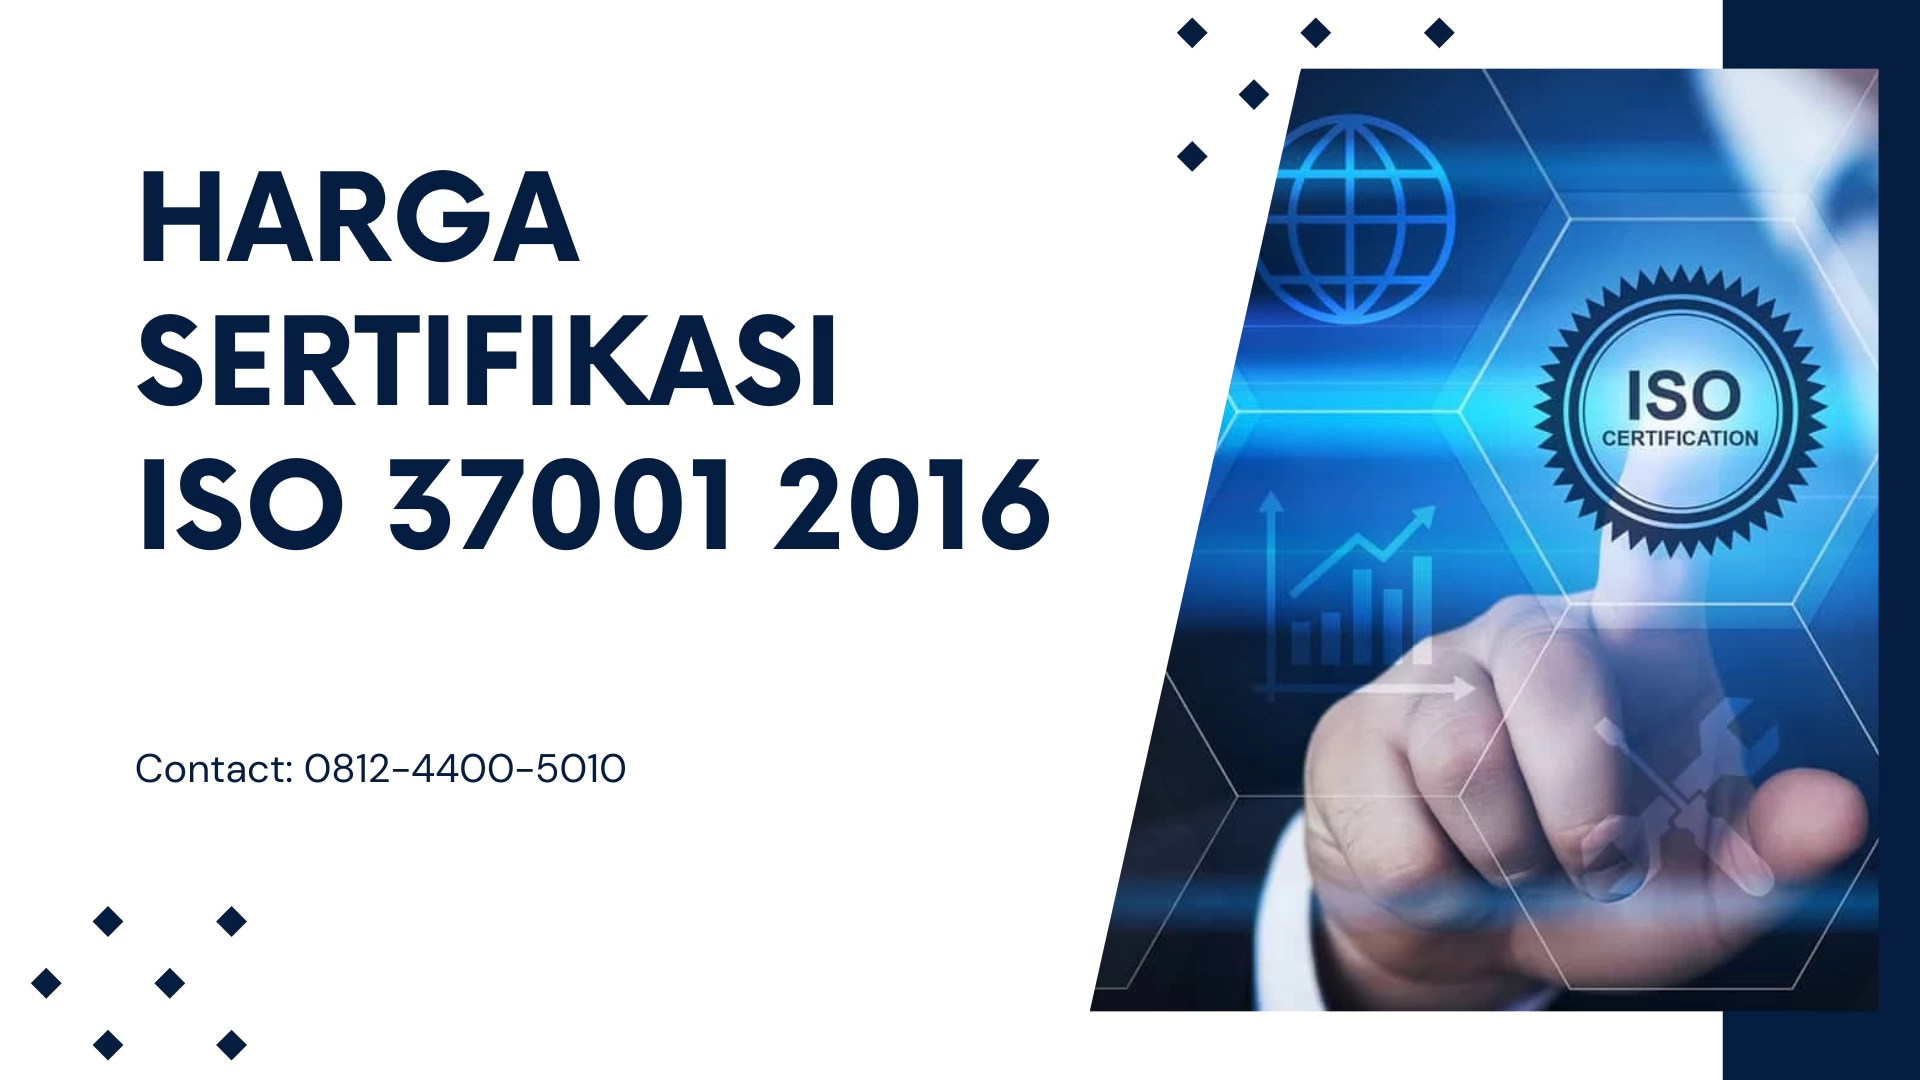 Harga Sertifikasi ISO 37001 2016